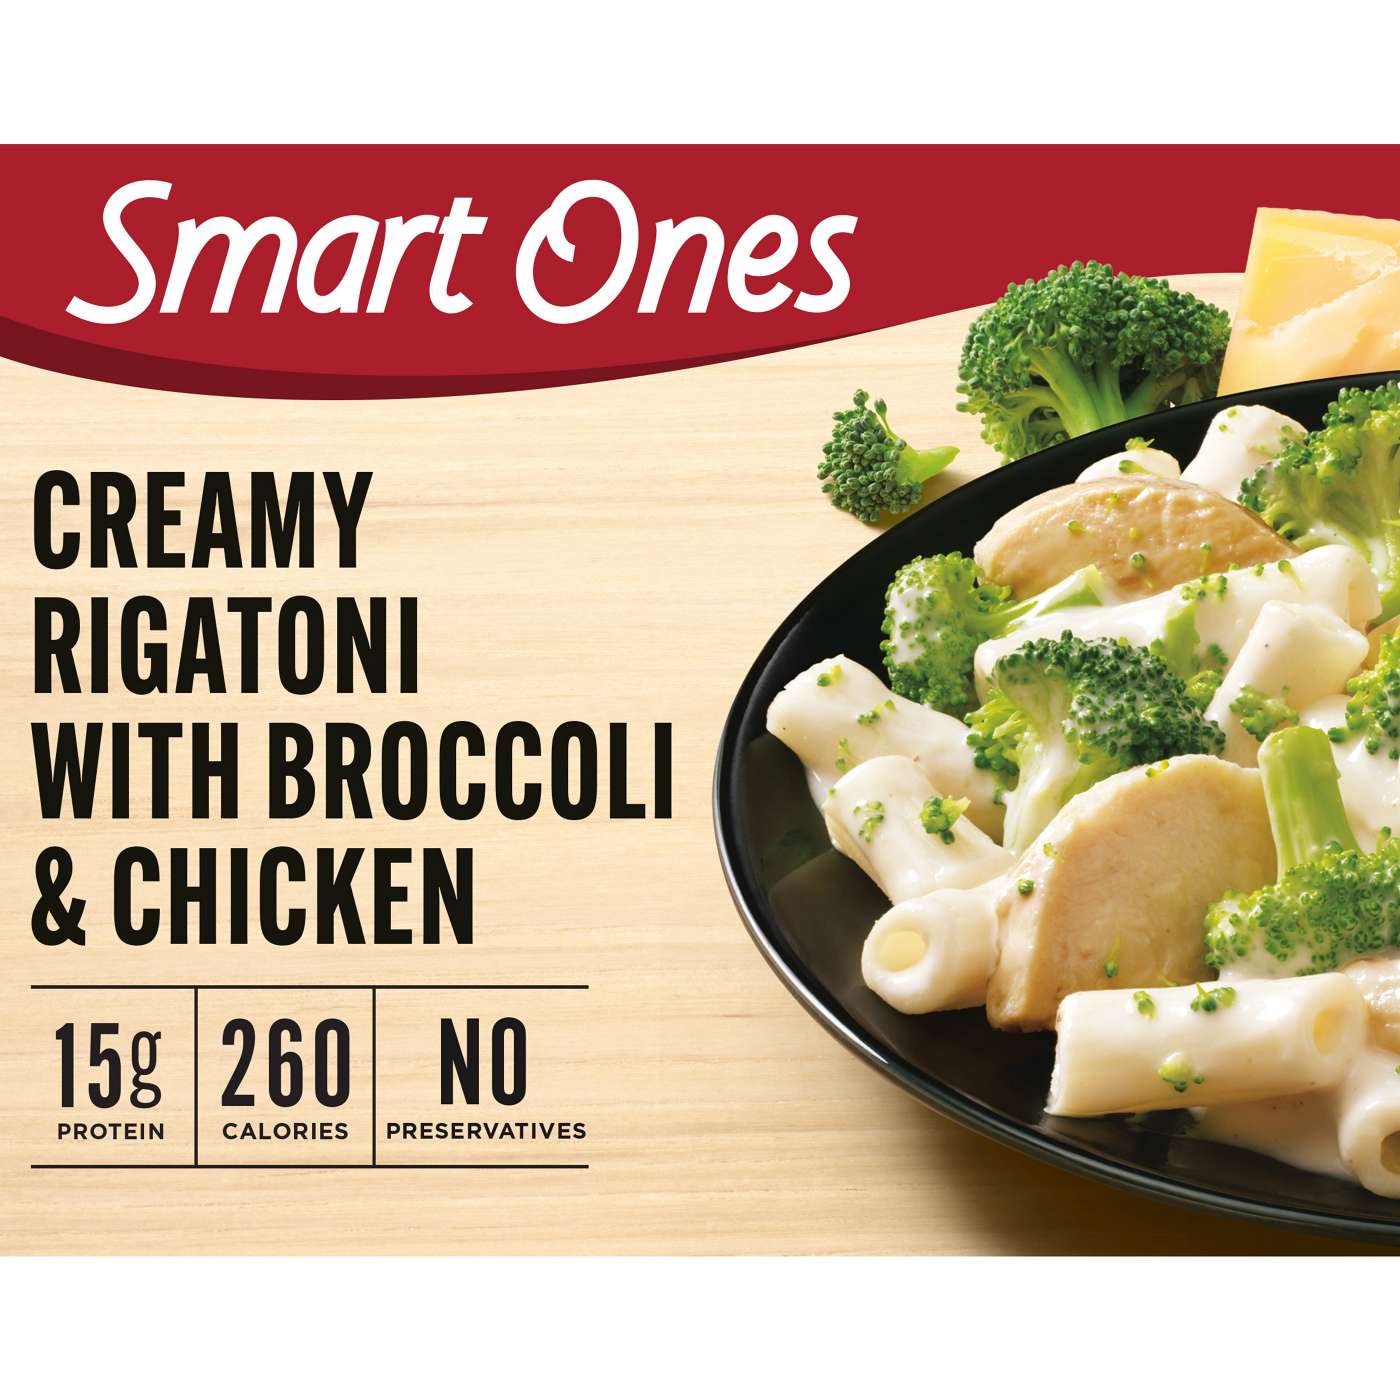 Smart Ones Creamy Rigatoni, Broccoli & Chicken Frozen Meal; image 1 of 2